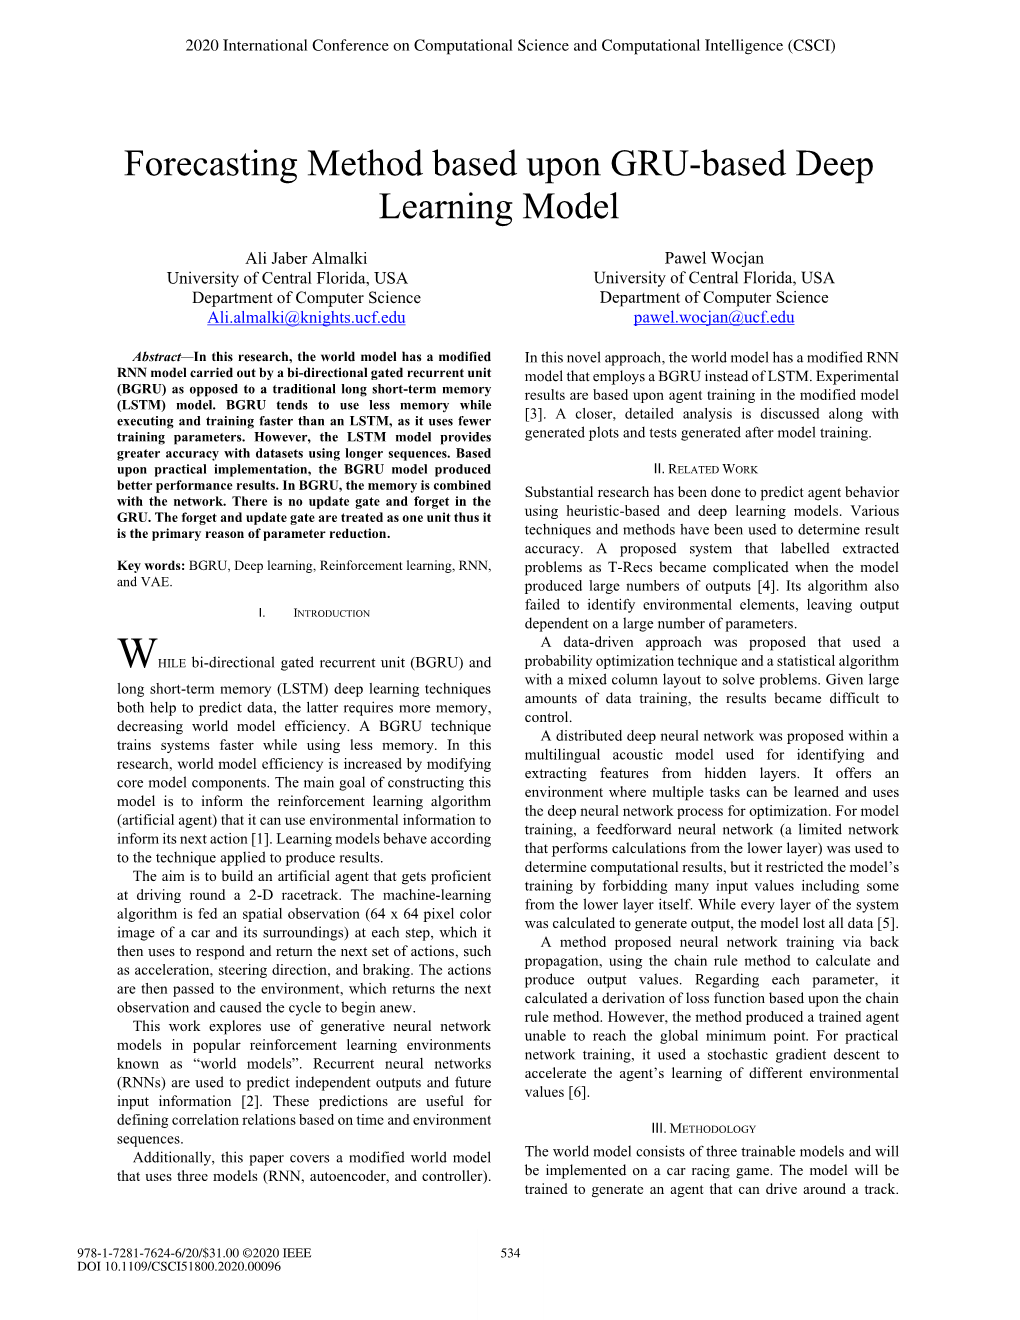 Forecasting Method Based Upon GRU-Based Deep Learning Model